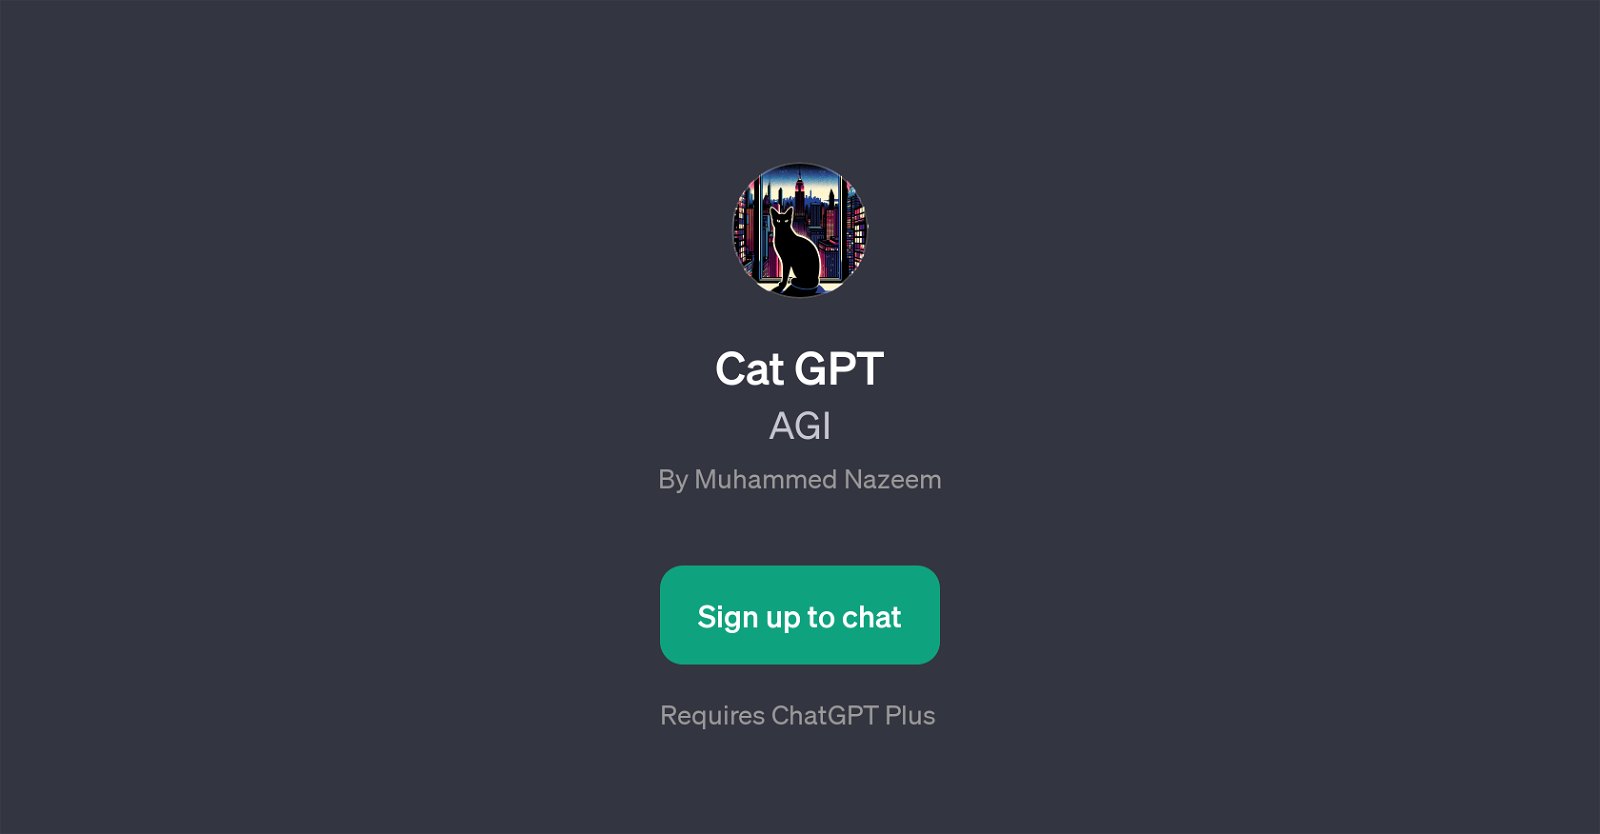 Cat GPT website